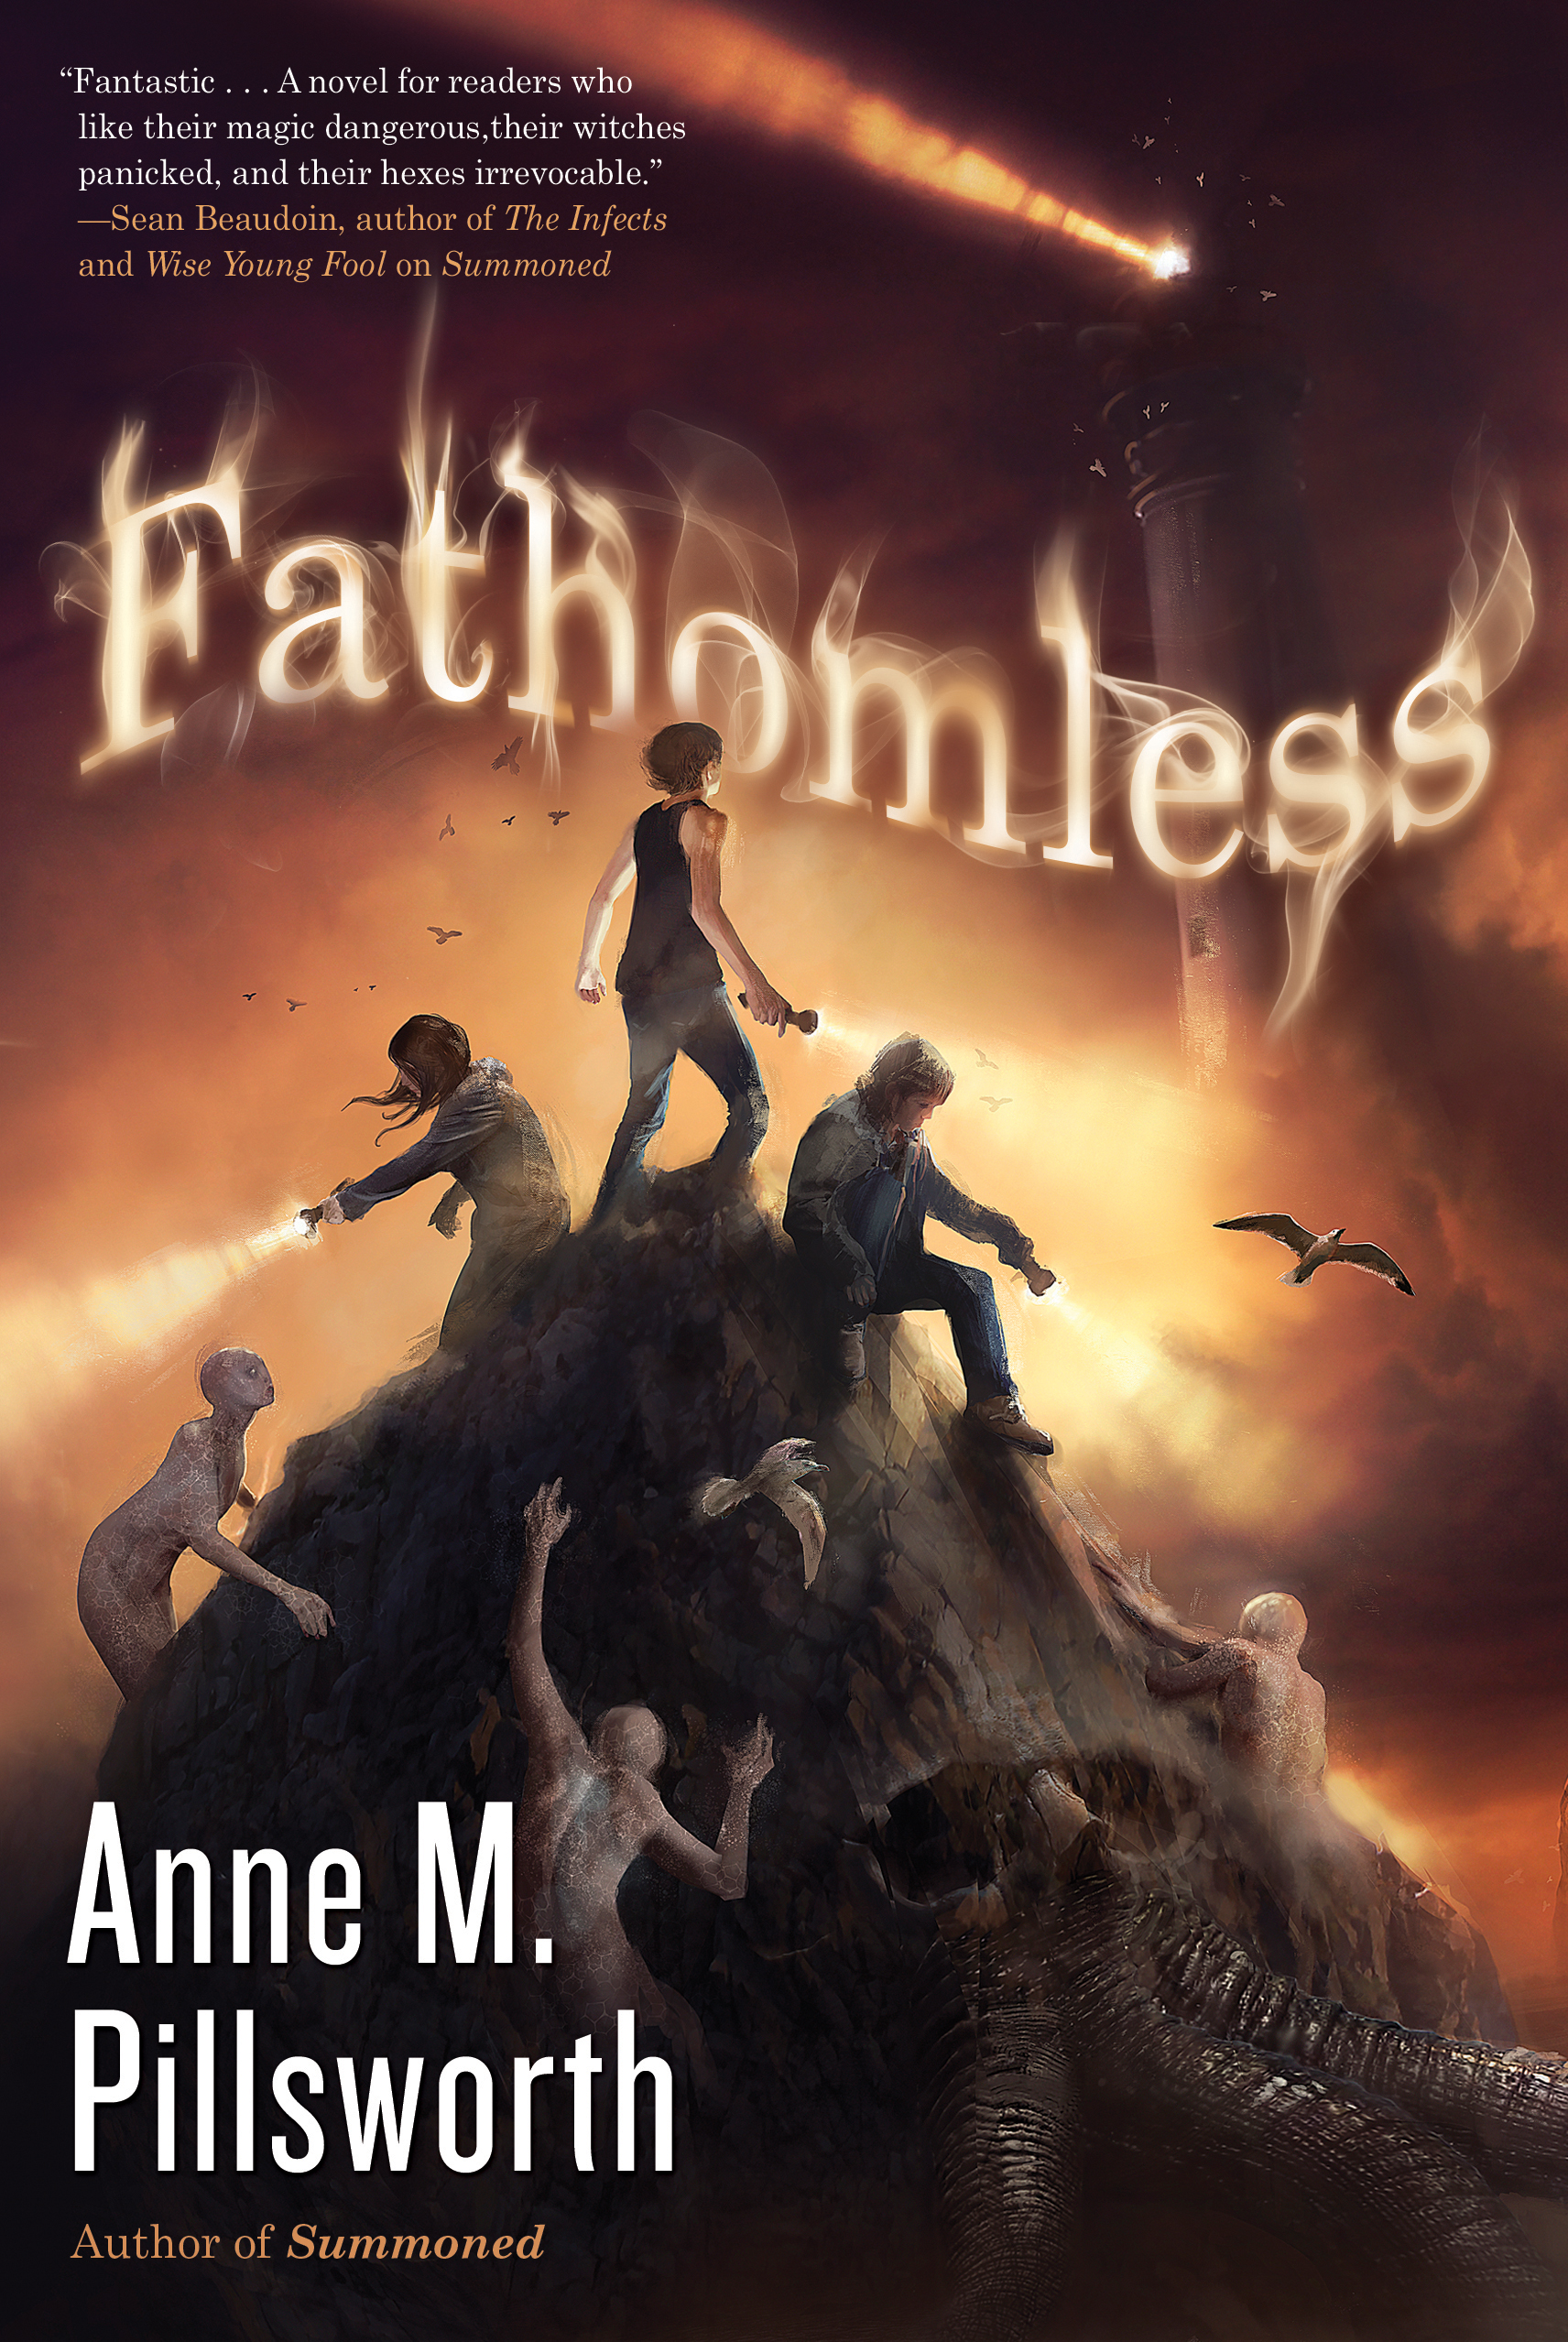 Fathomless by Anne M. Pillsworth